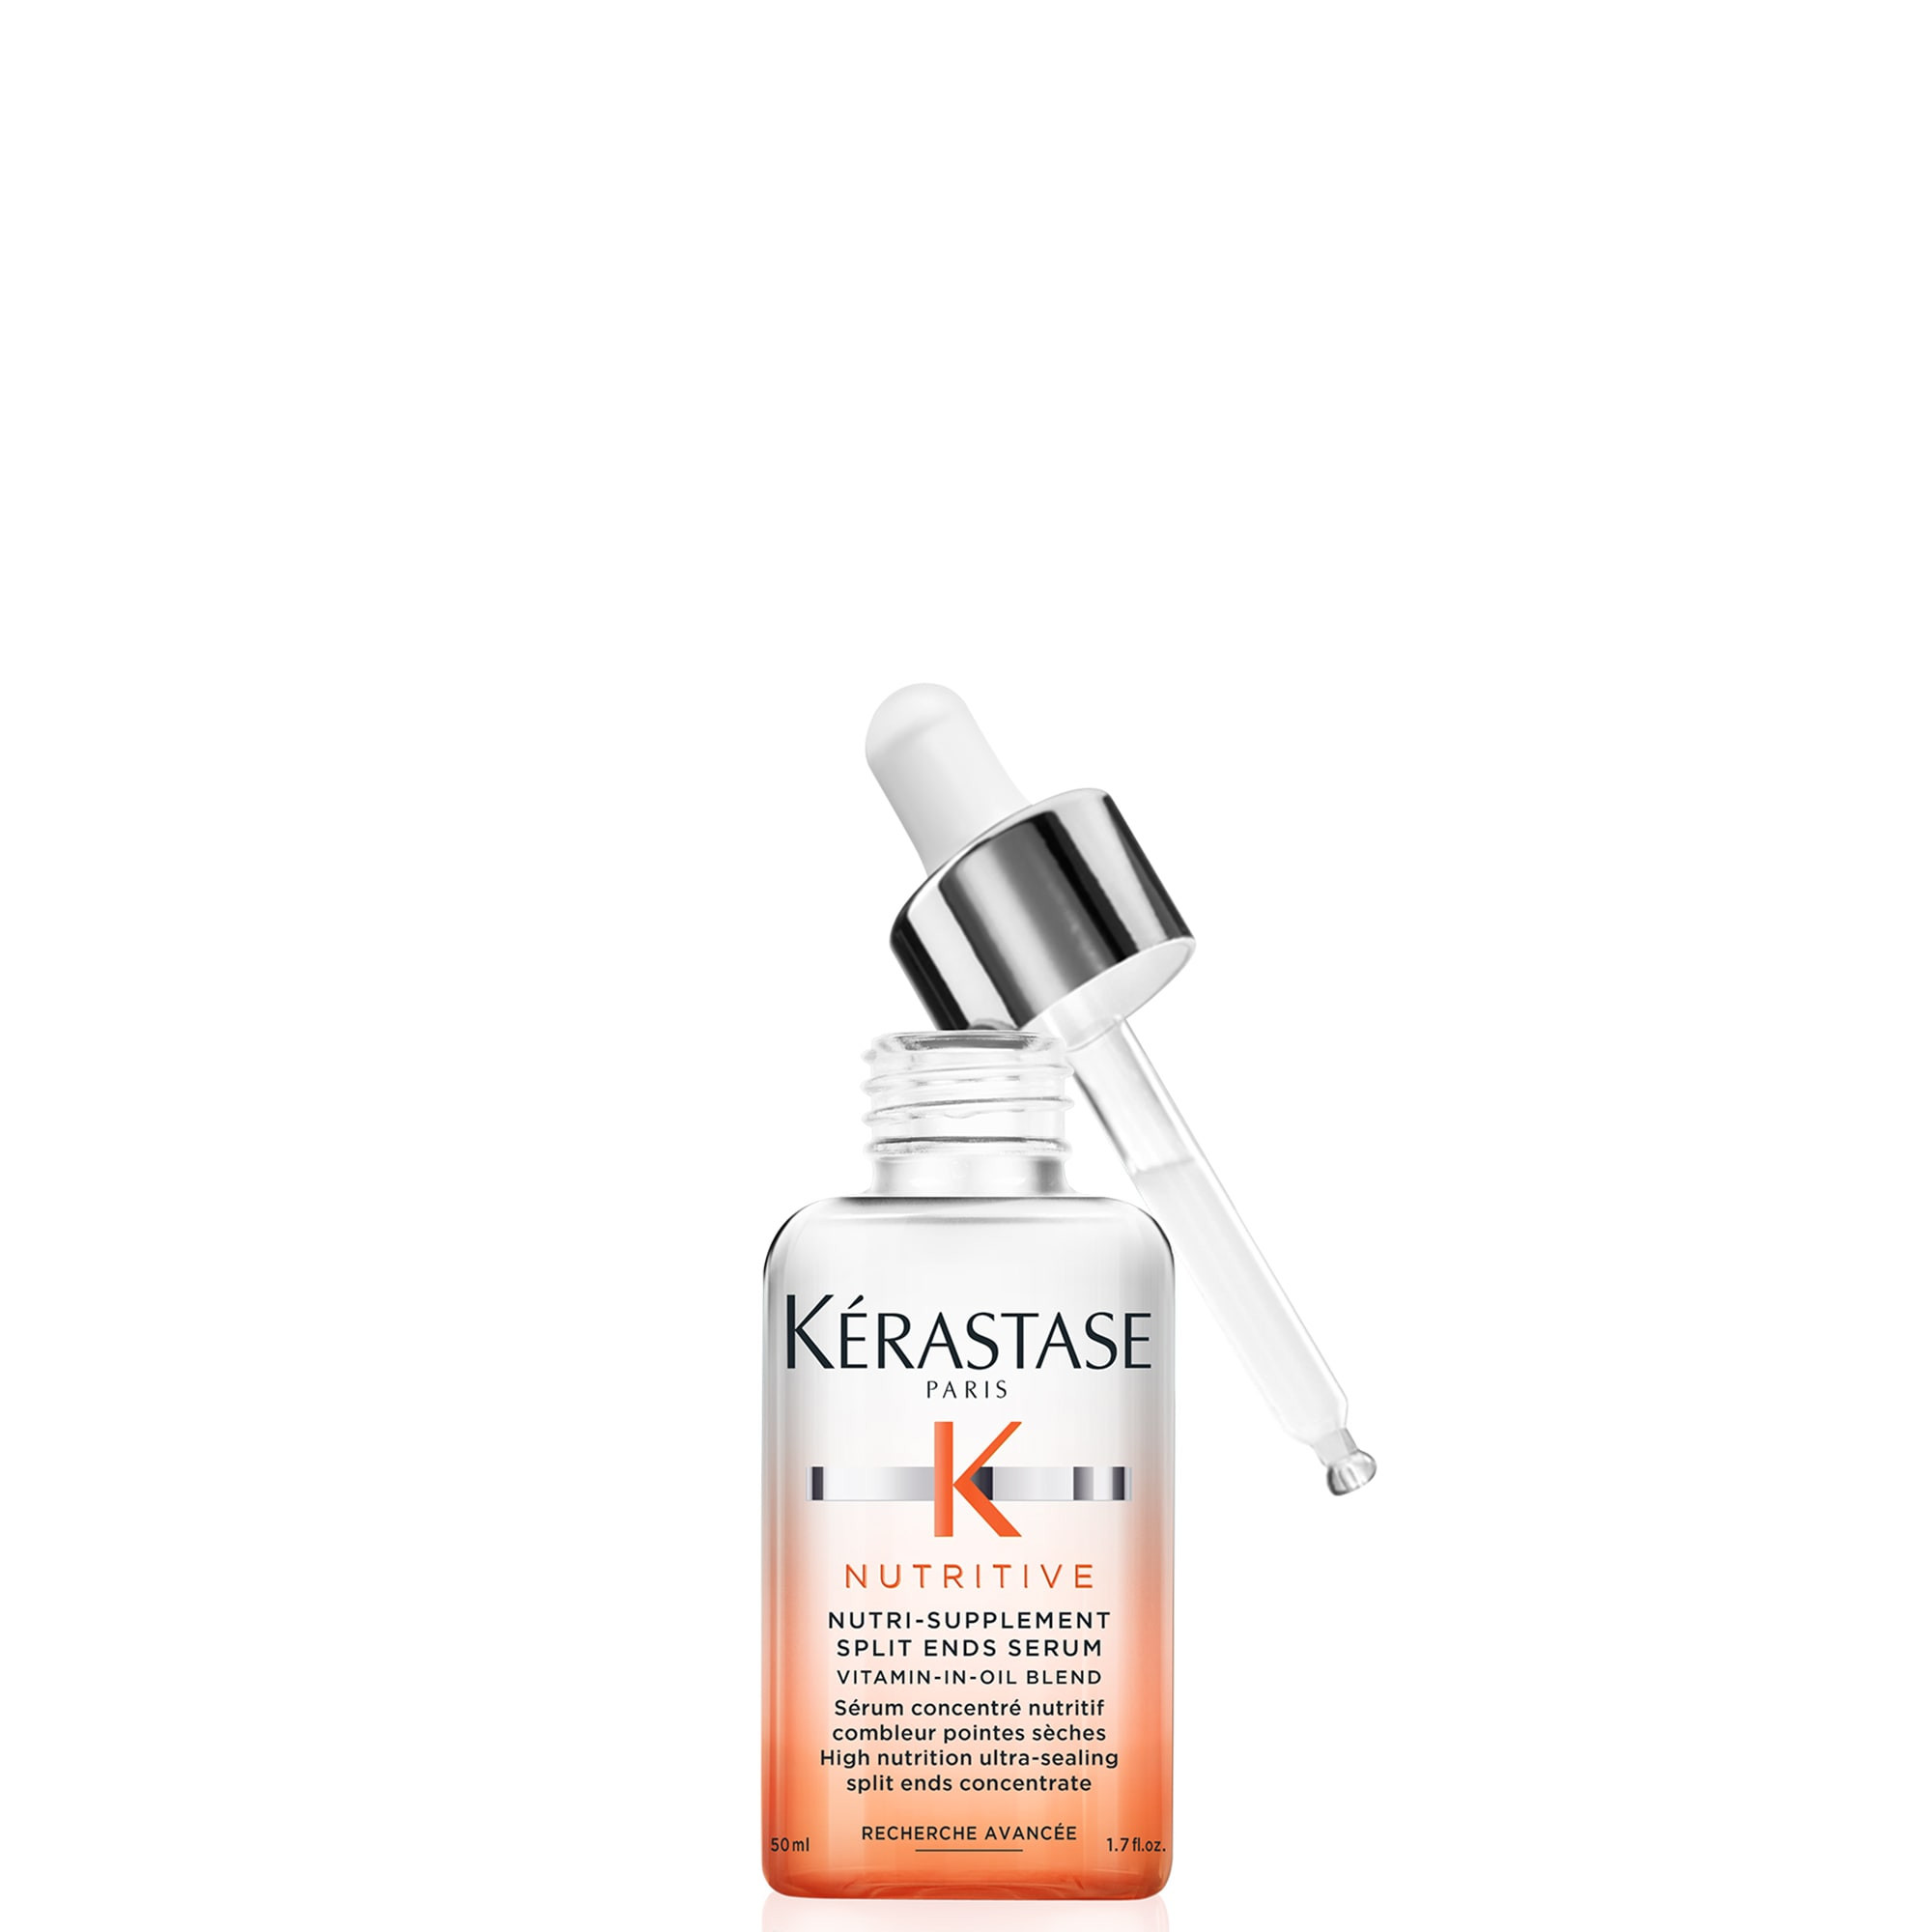 Kérastase – Nutritive – Nutri-Supplement Split Ends Serum (50ml)